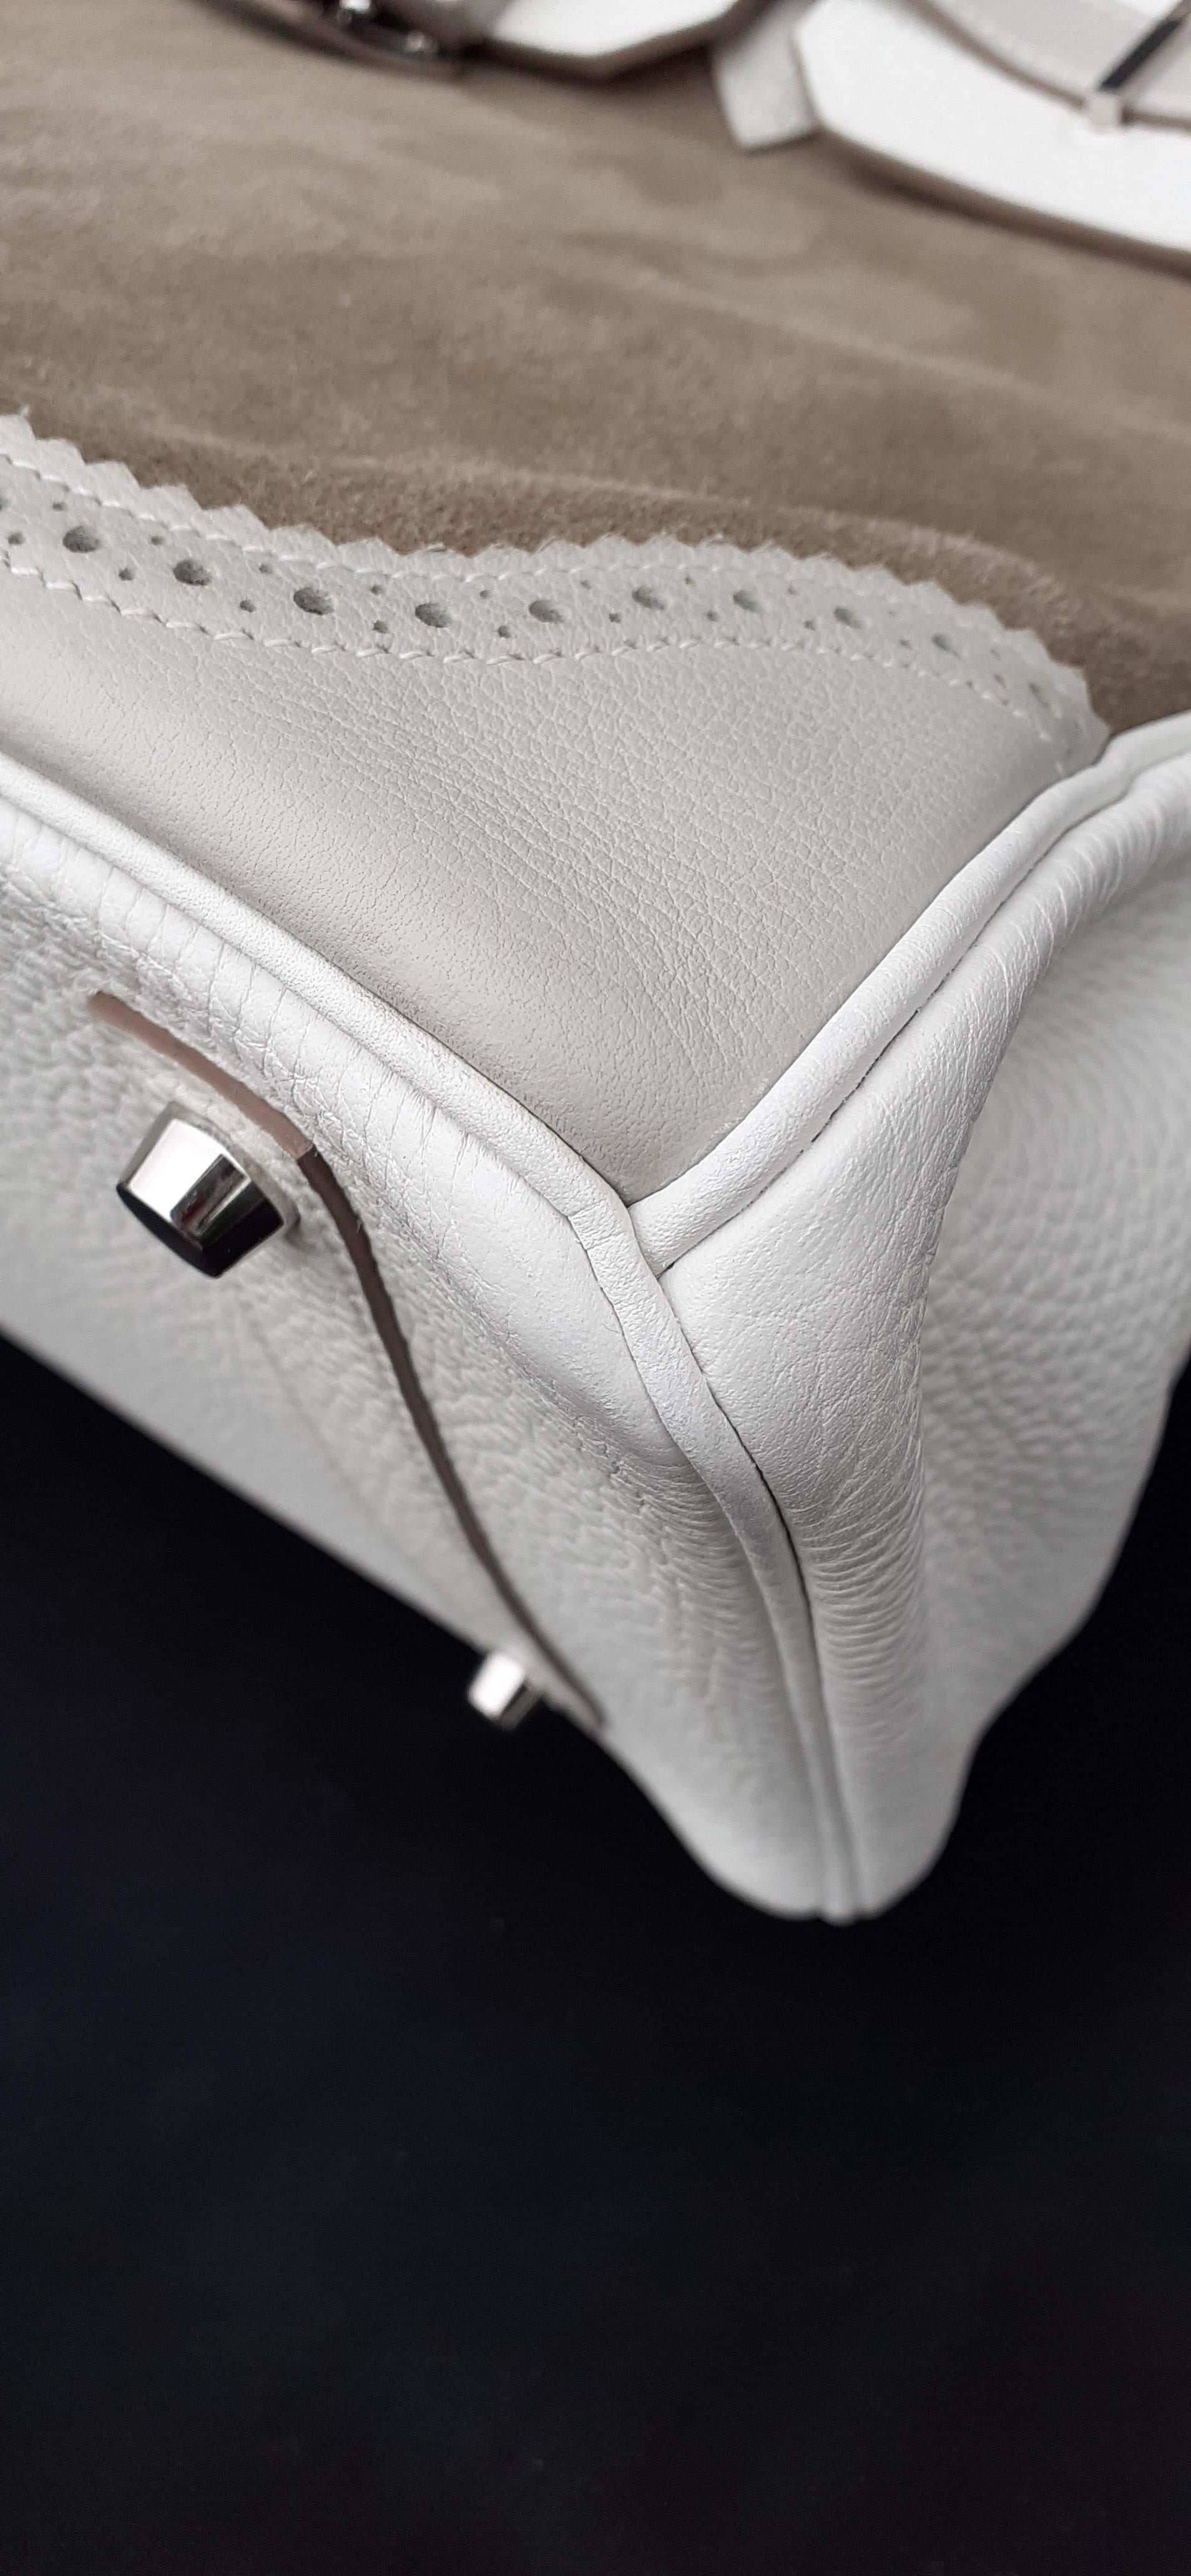 Hermès Birkin 35 Tasche Limited Edition Ghillies Grizzly Doblis Grau Weiß Caillou im Angebot 1